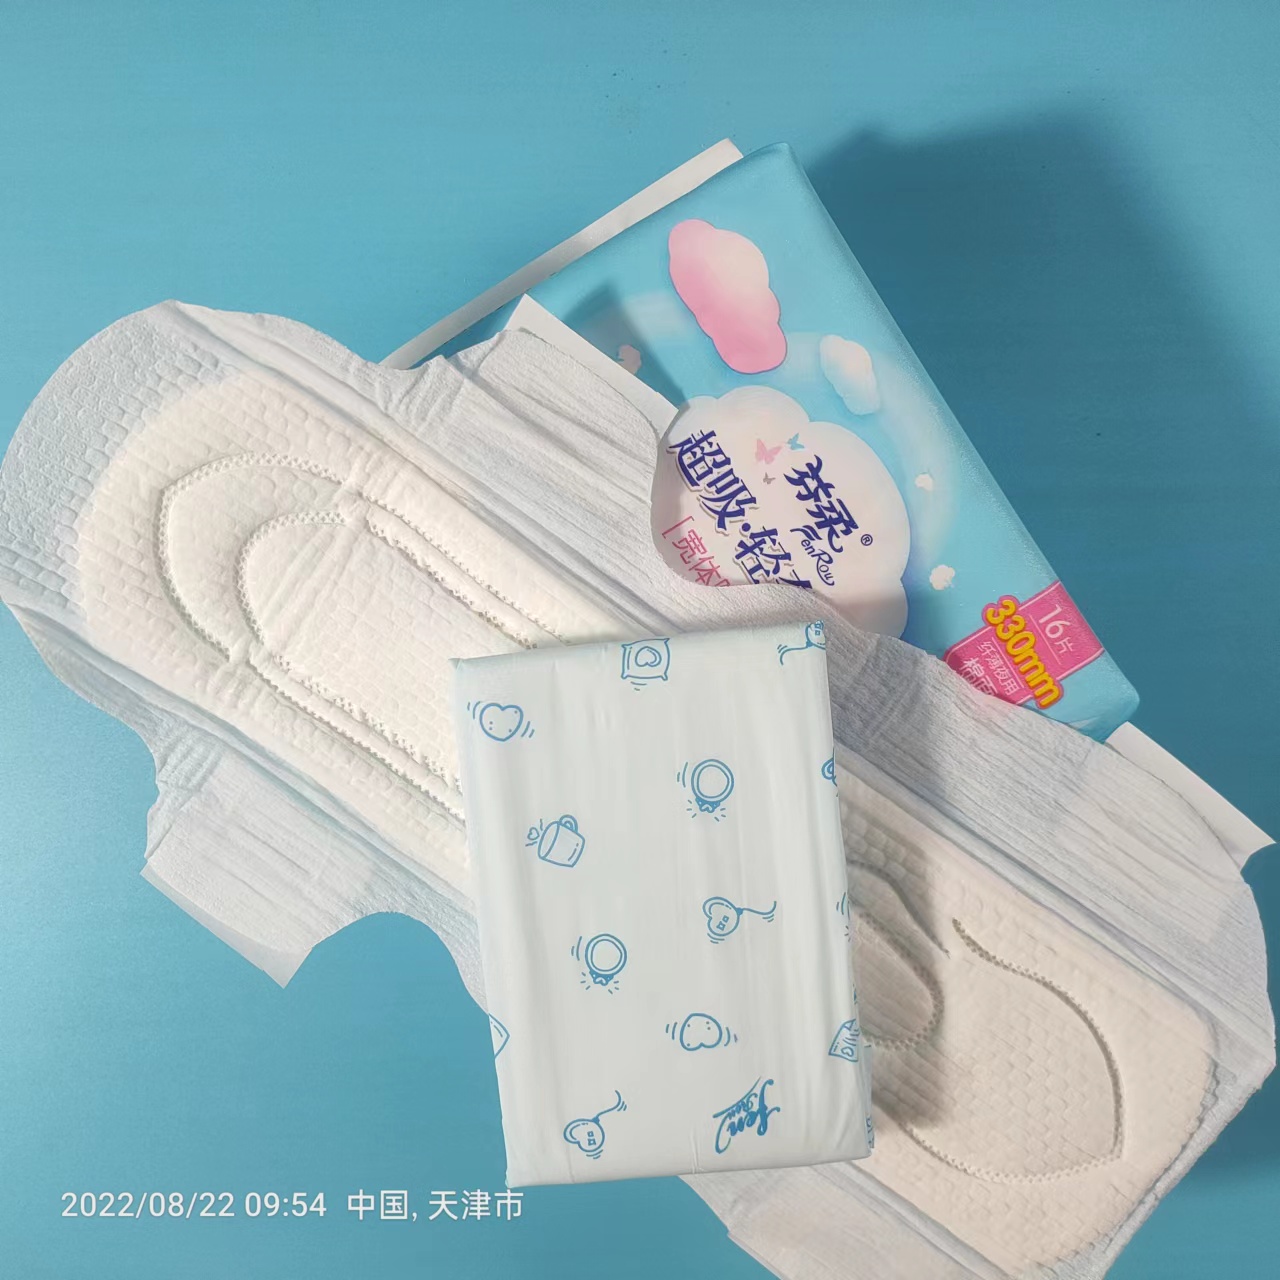 China Wholesale free sample brand name women Sanitary menopad Napkin pad